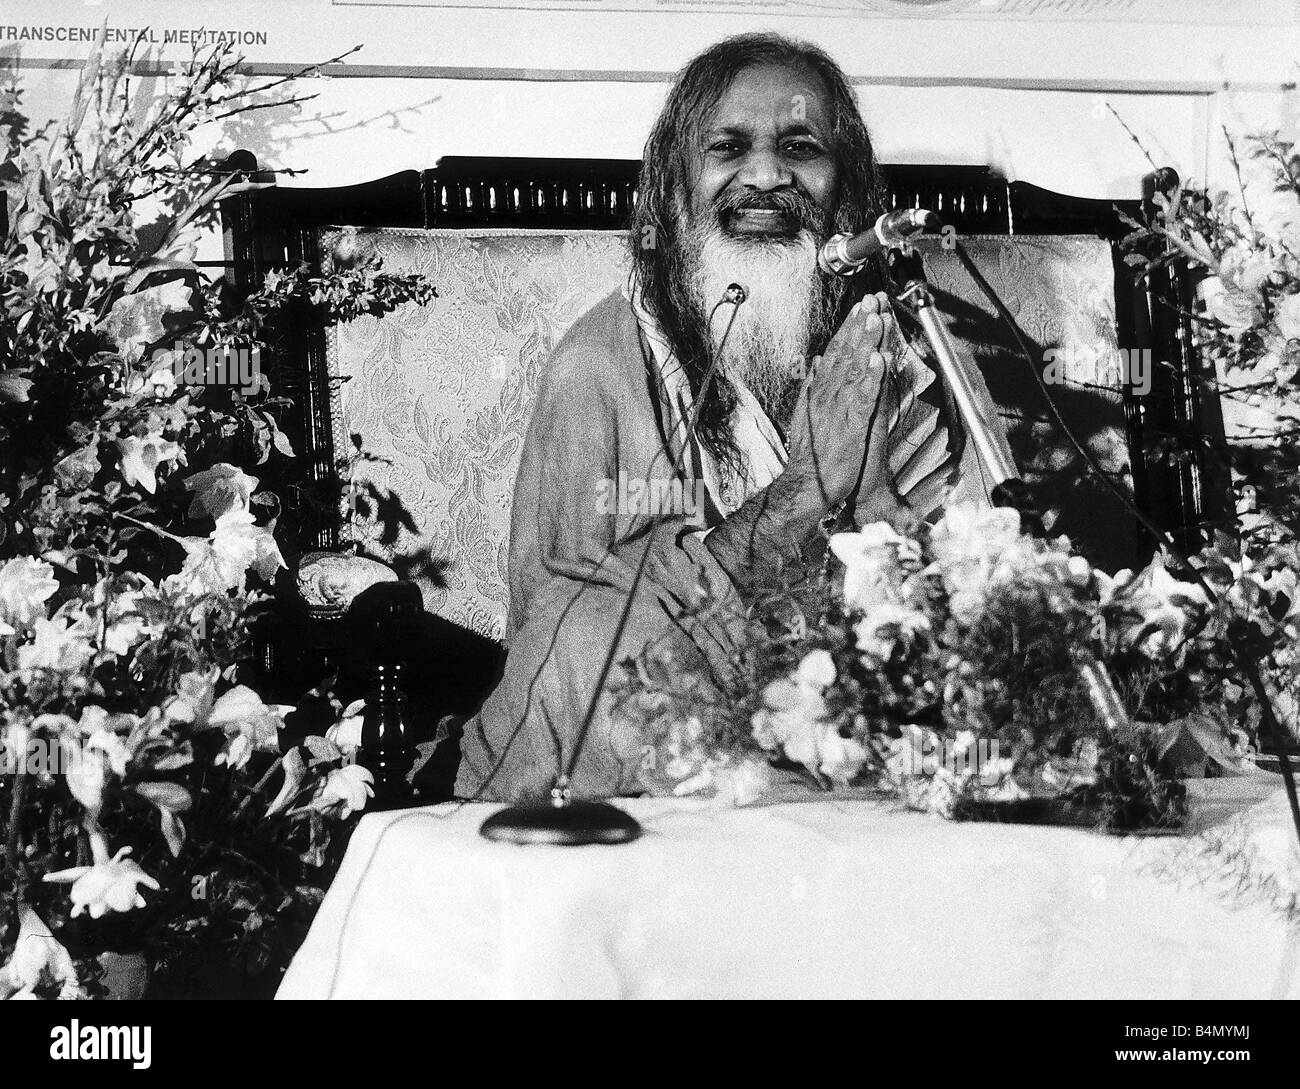 Maharishi mahesh yogi hi-res stock photography and images - Alamy